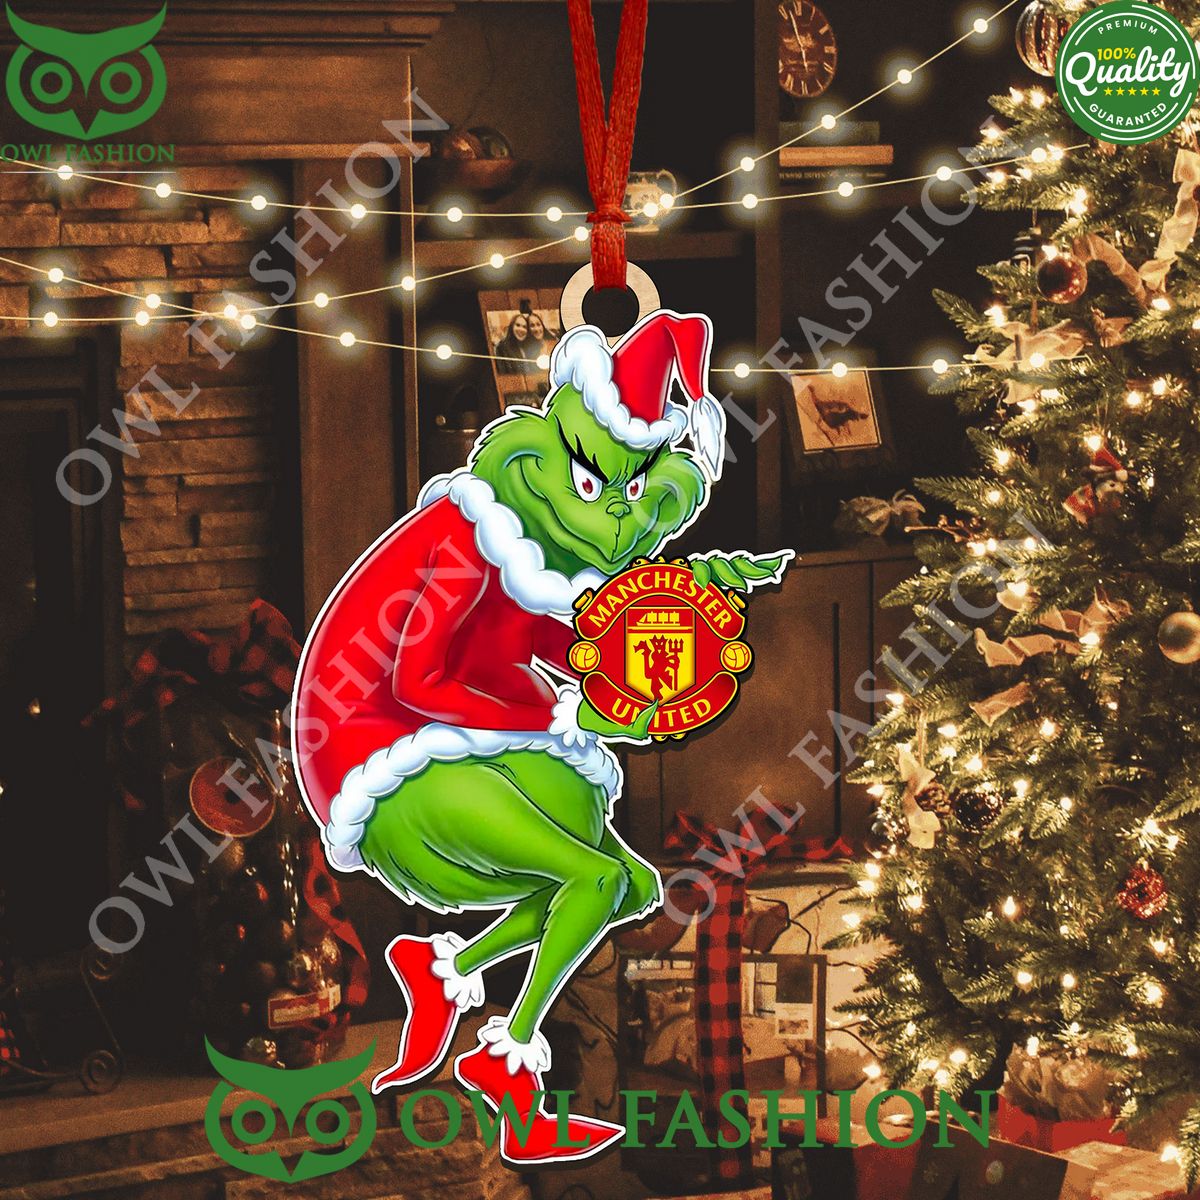 Manchester United Grinch Hug 2-Side Printed Ornament